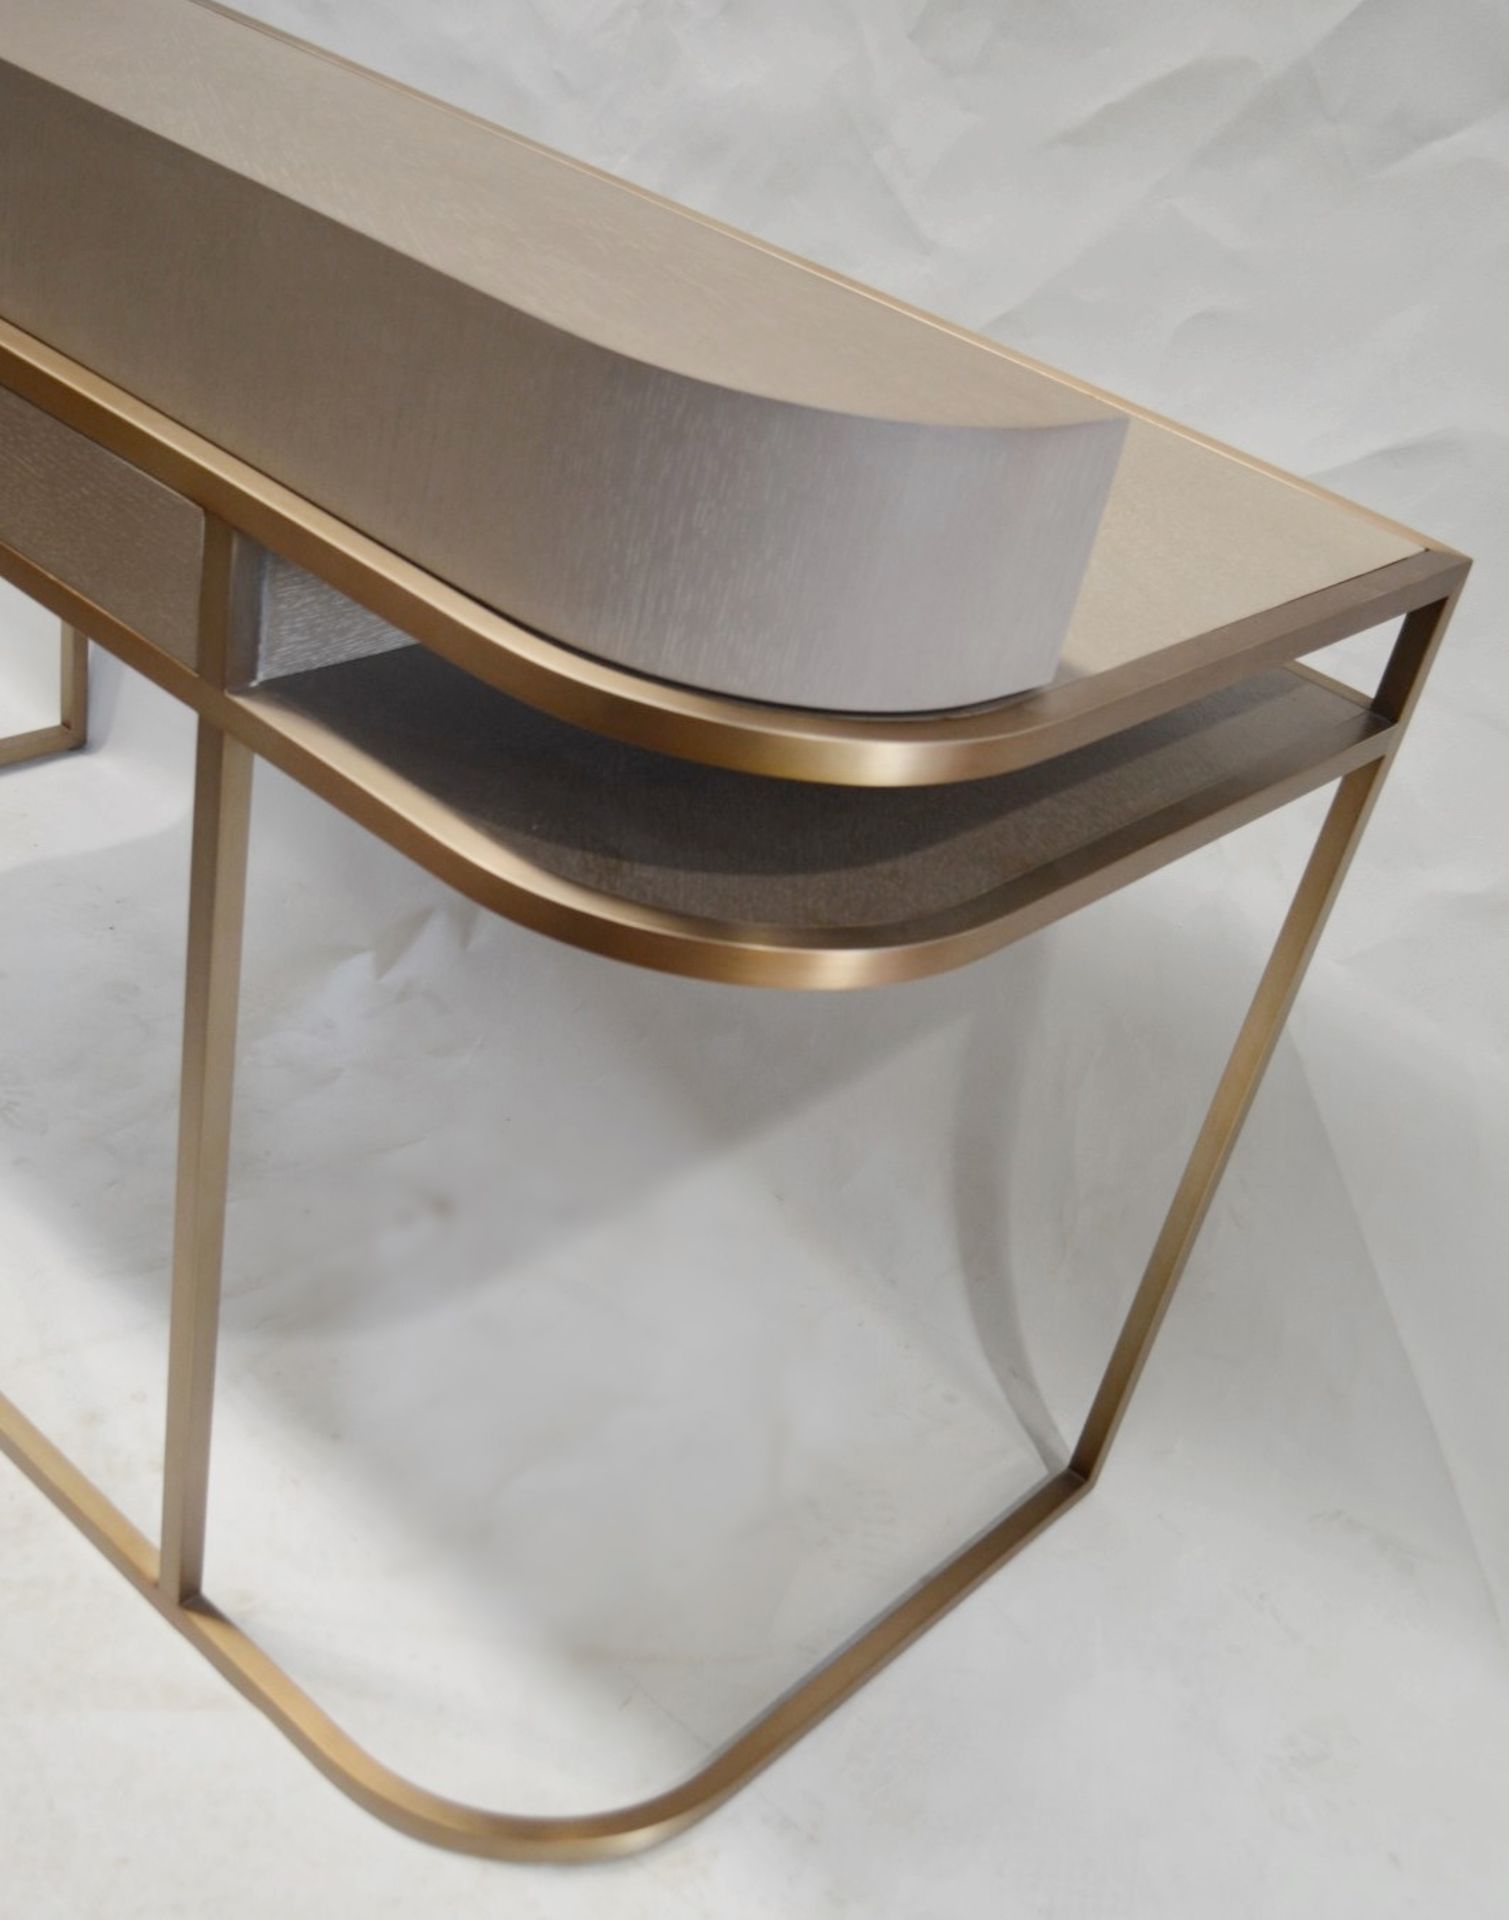 1 x EICHHOLTZ 'Highland' Designer Desk With Washed Oak And Brushed Brass Finishes - Ex-Display - - Image 12 of 12